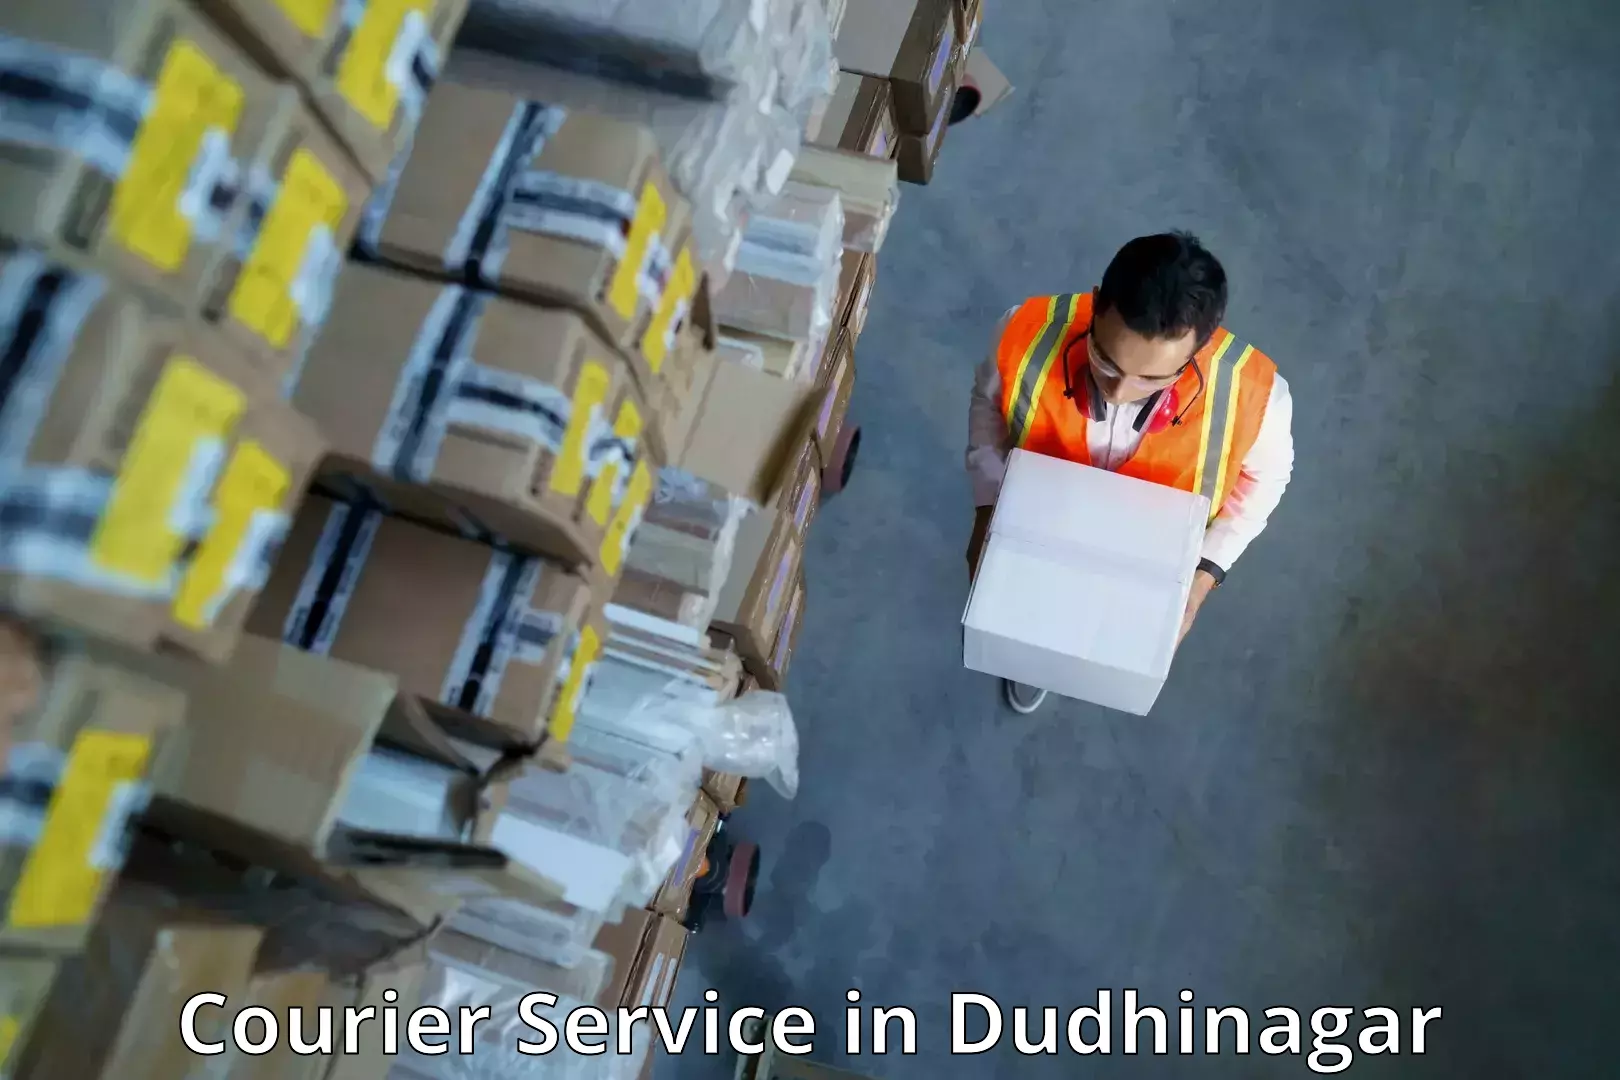 Seamless shipping experience in Dudhinagar